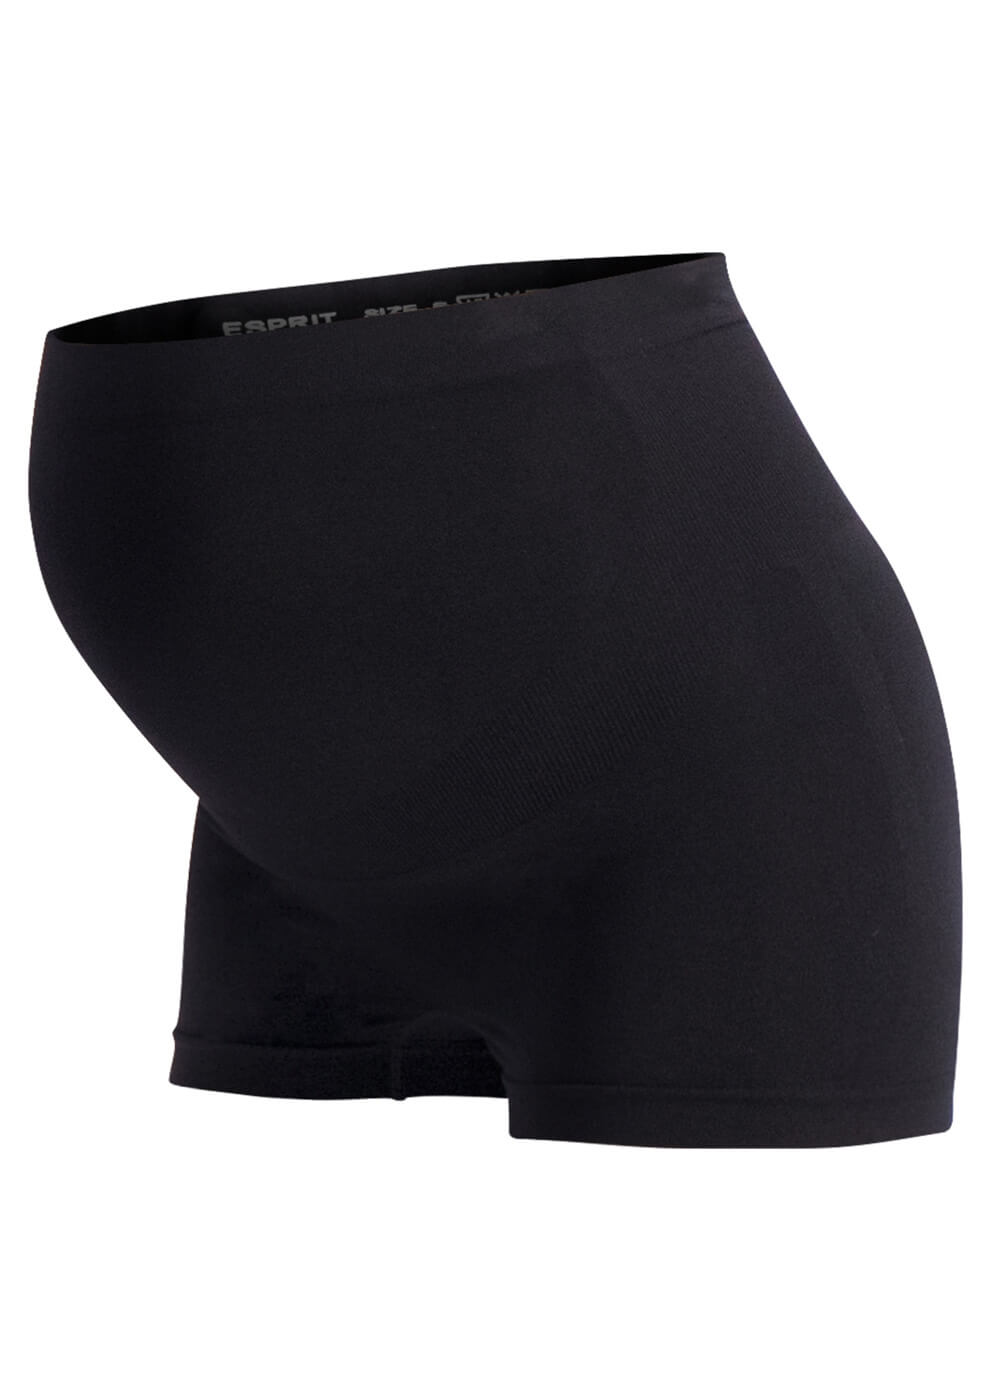 Seamless Maternity Underwear Shorts in Black by Esprit